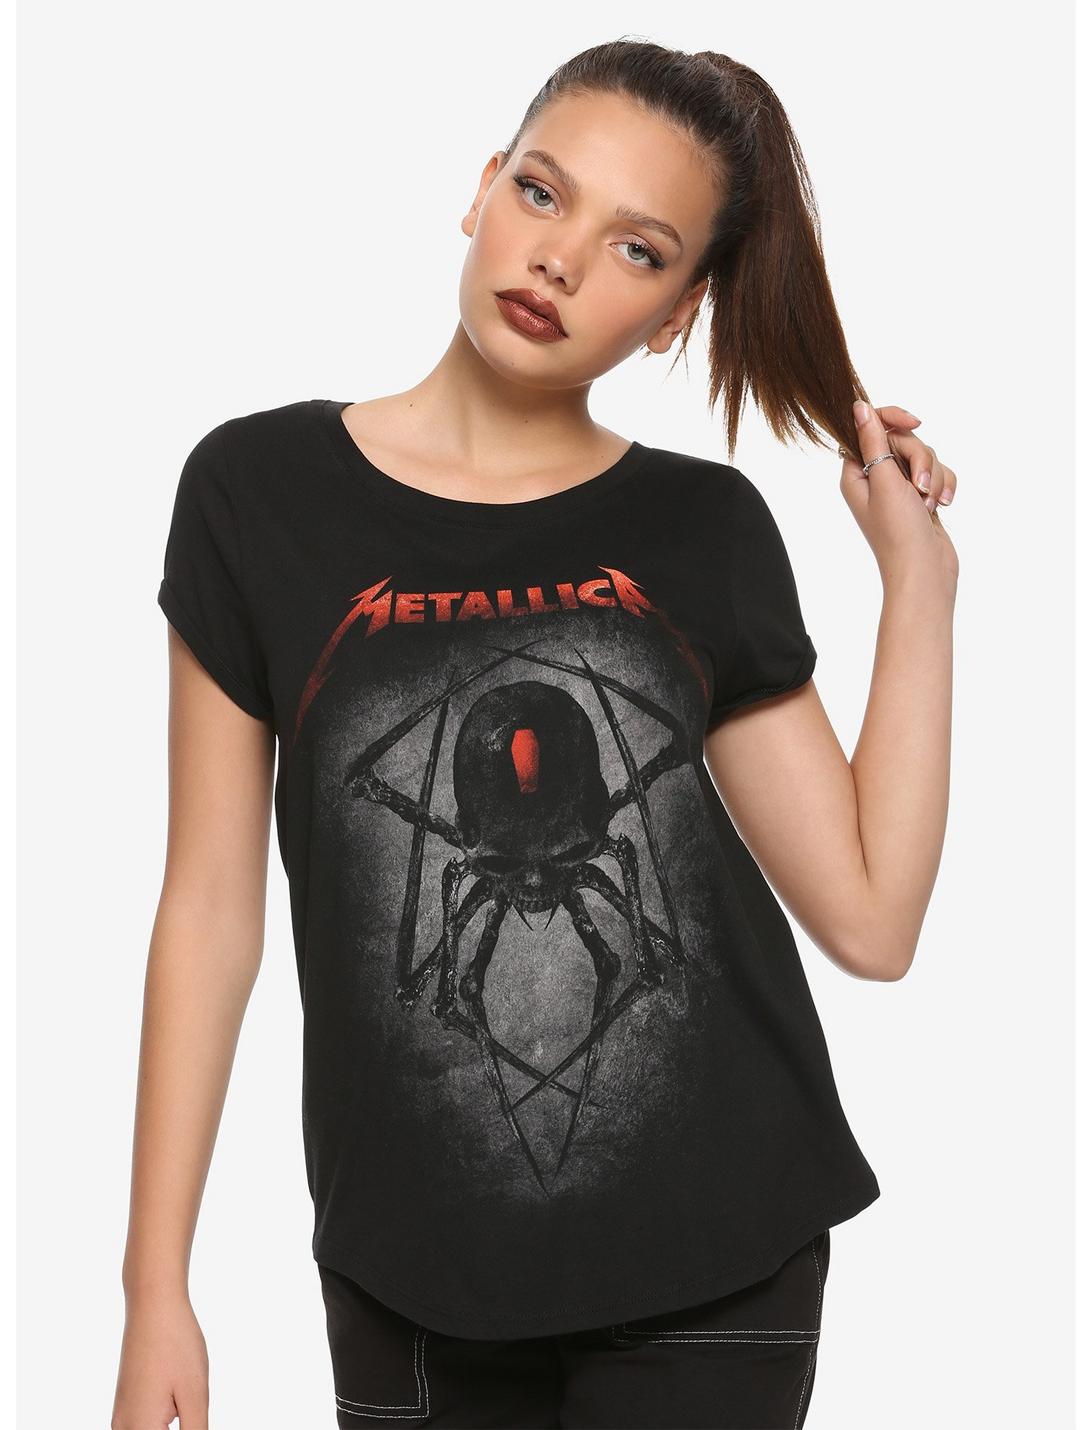 Metallica Black Widow Girls T-Shirt, BLACK, hi-res